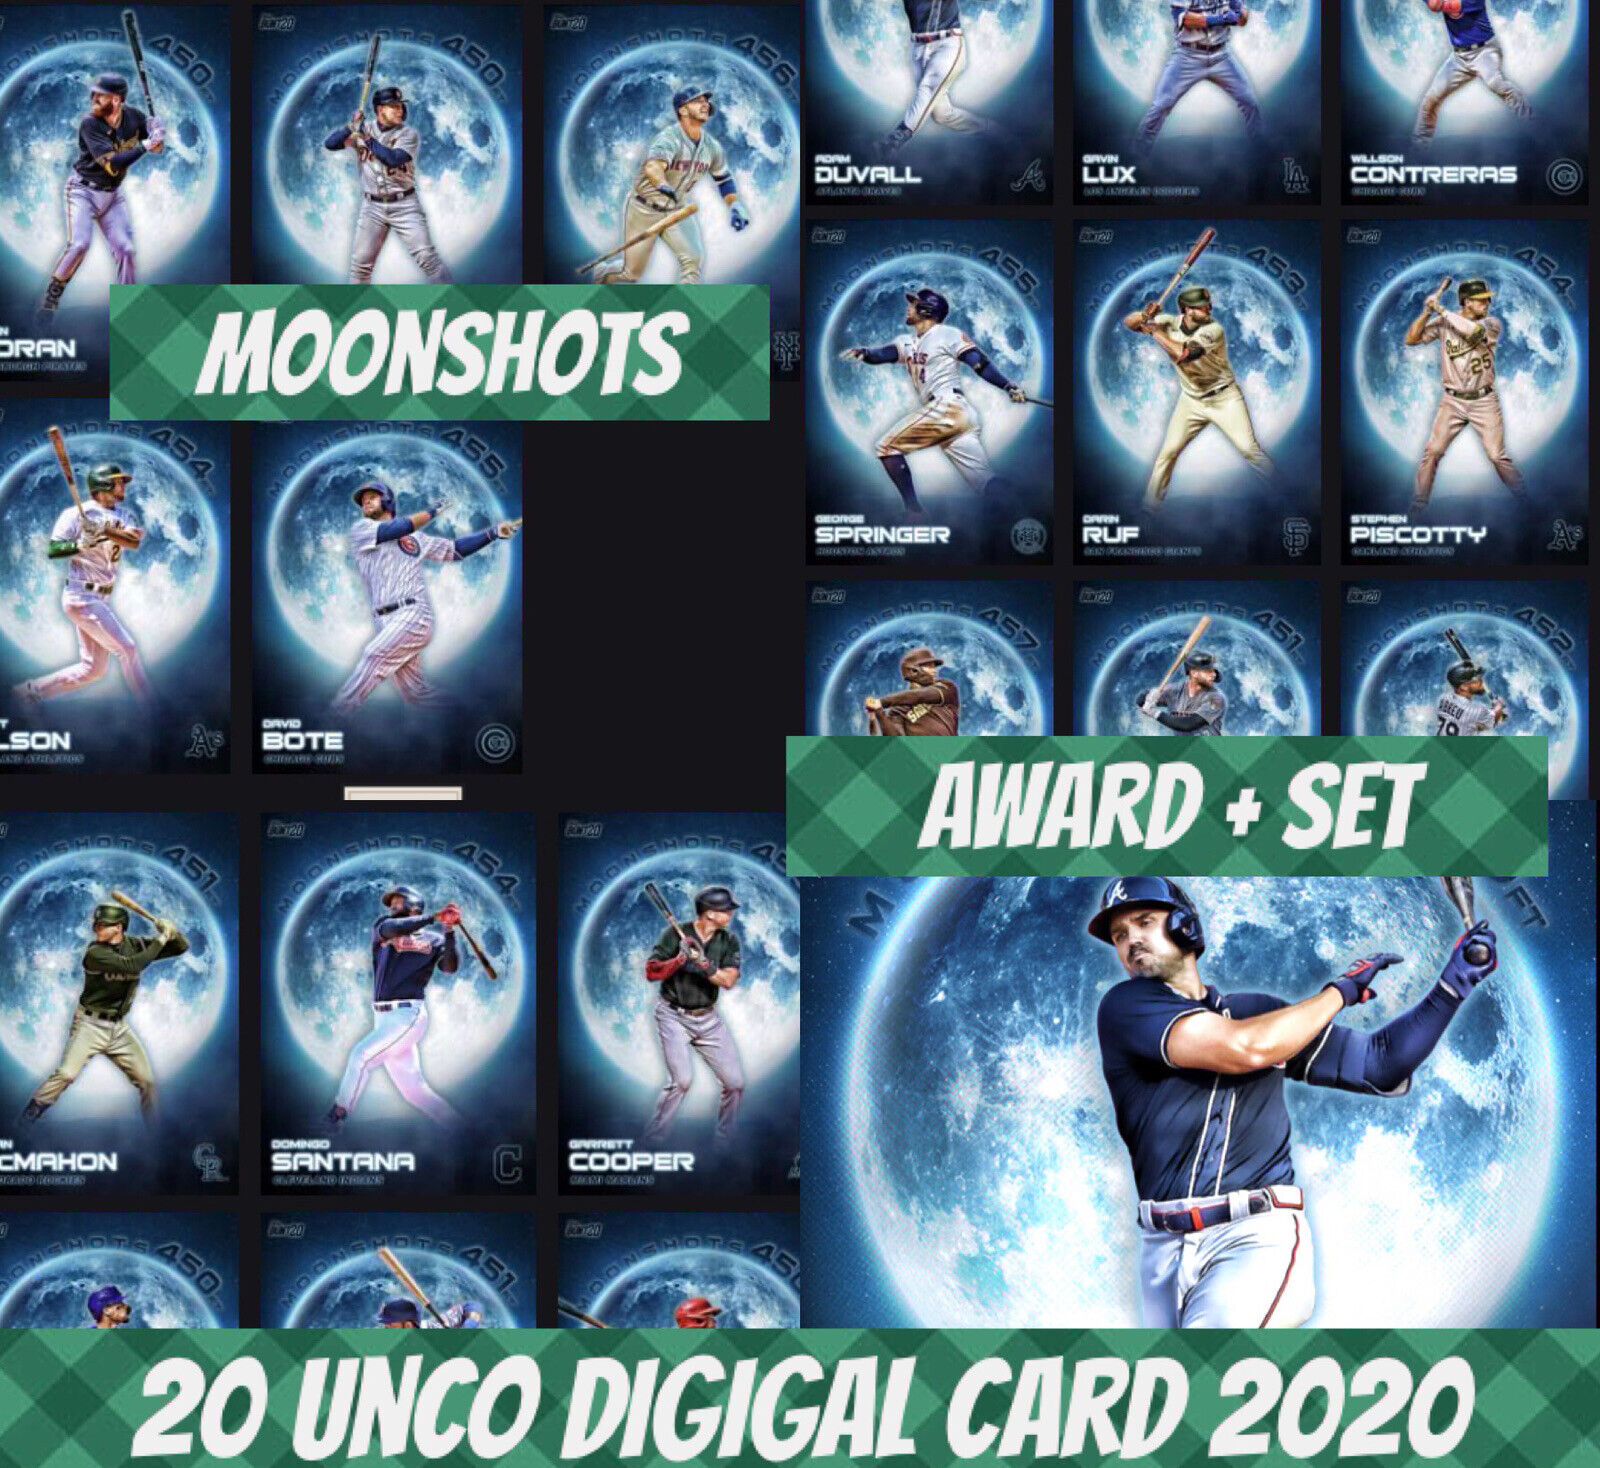 2020 Topps Colorful Unco Adam Duvall Unco Award + Set (1+19) Moonshots Digital